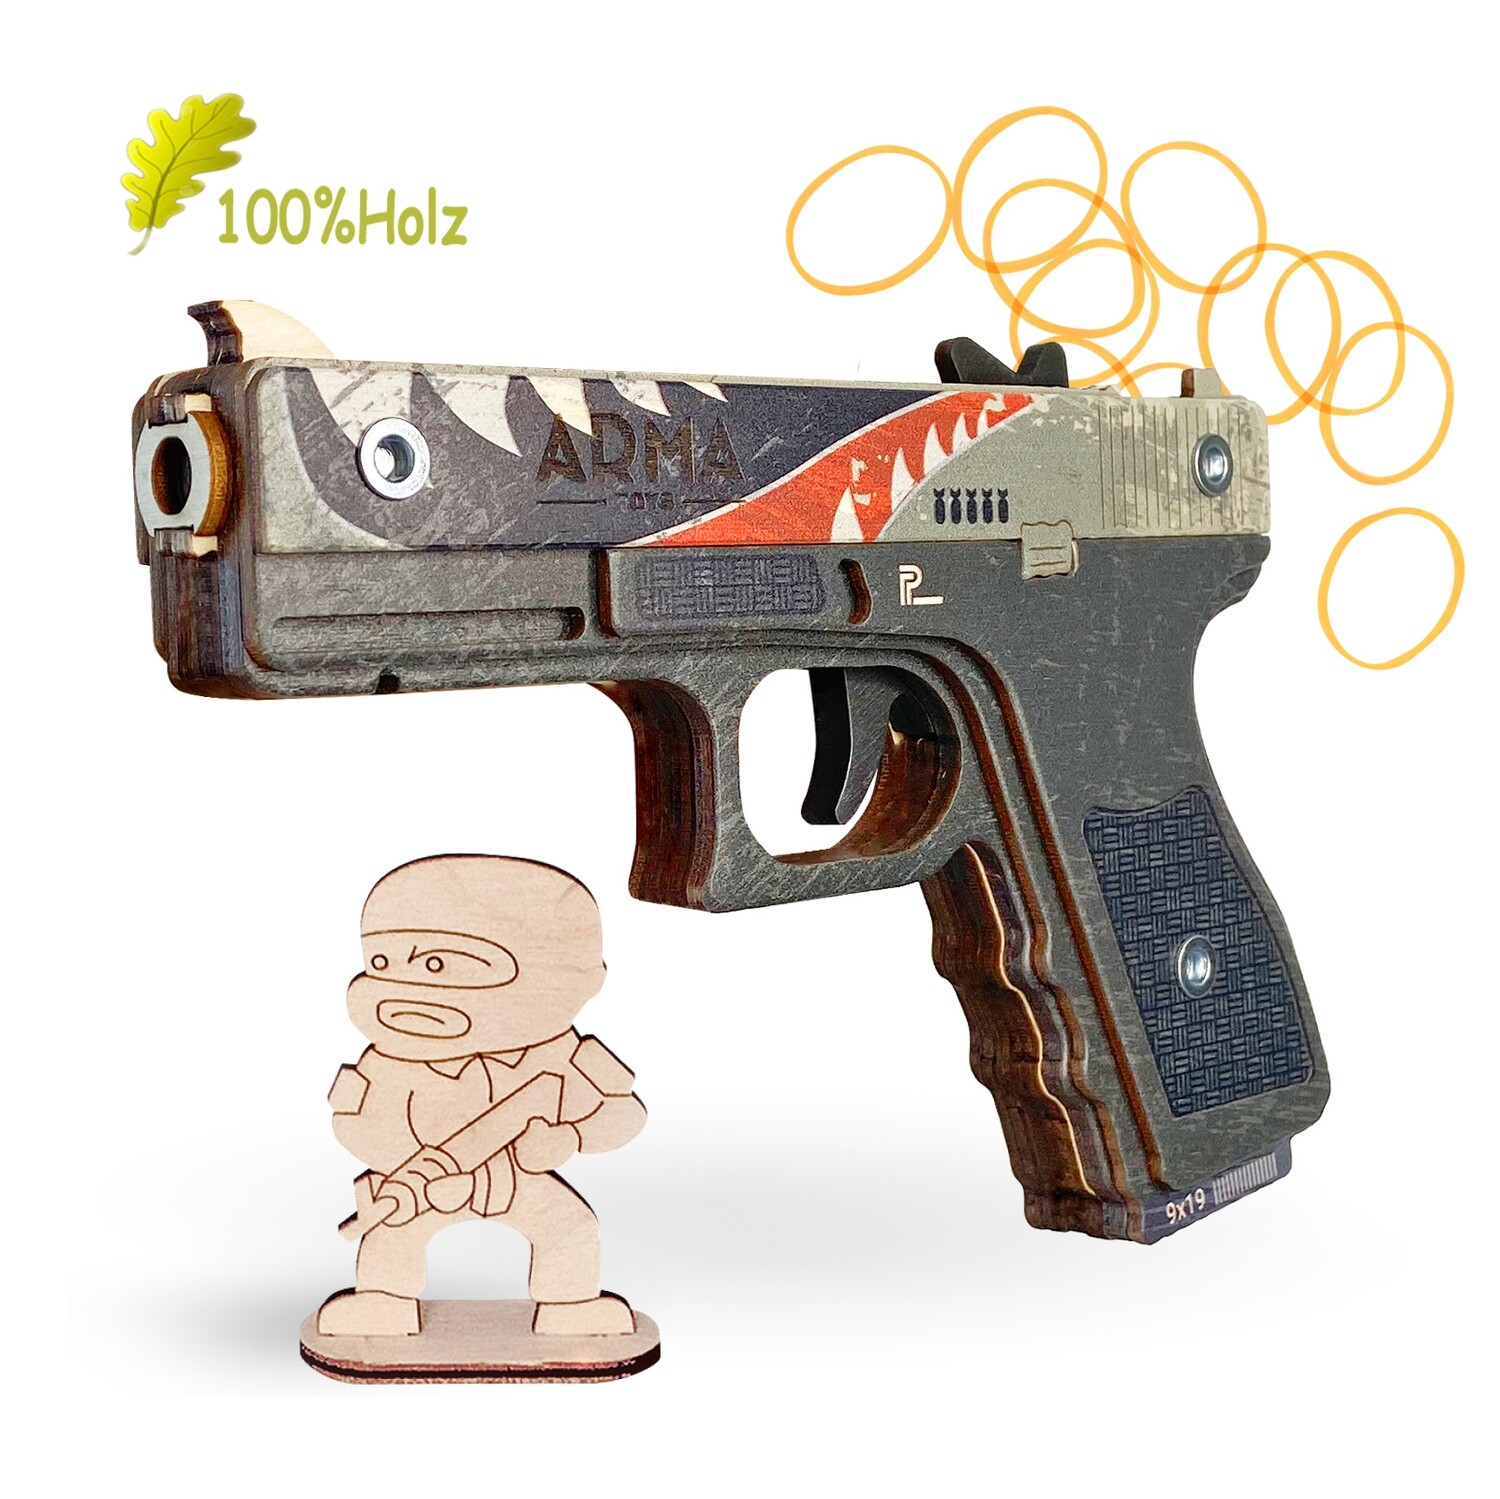 Arma Toys Glock Falke Gummibandpistole Kinderpistole Counter-Strike Holz Pistole 